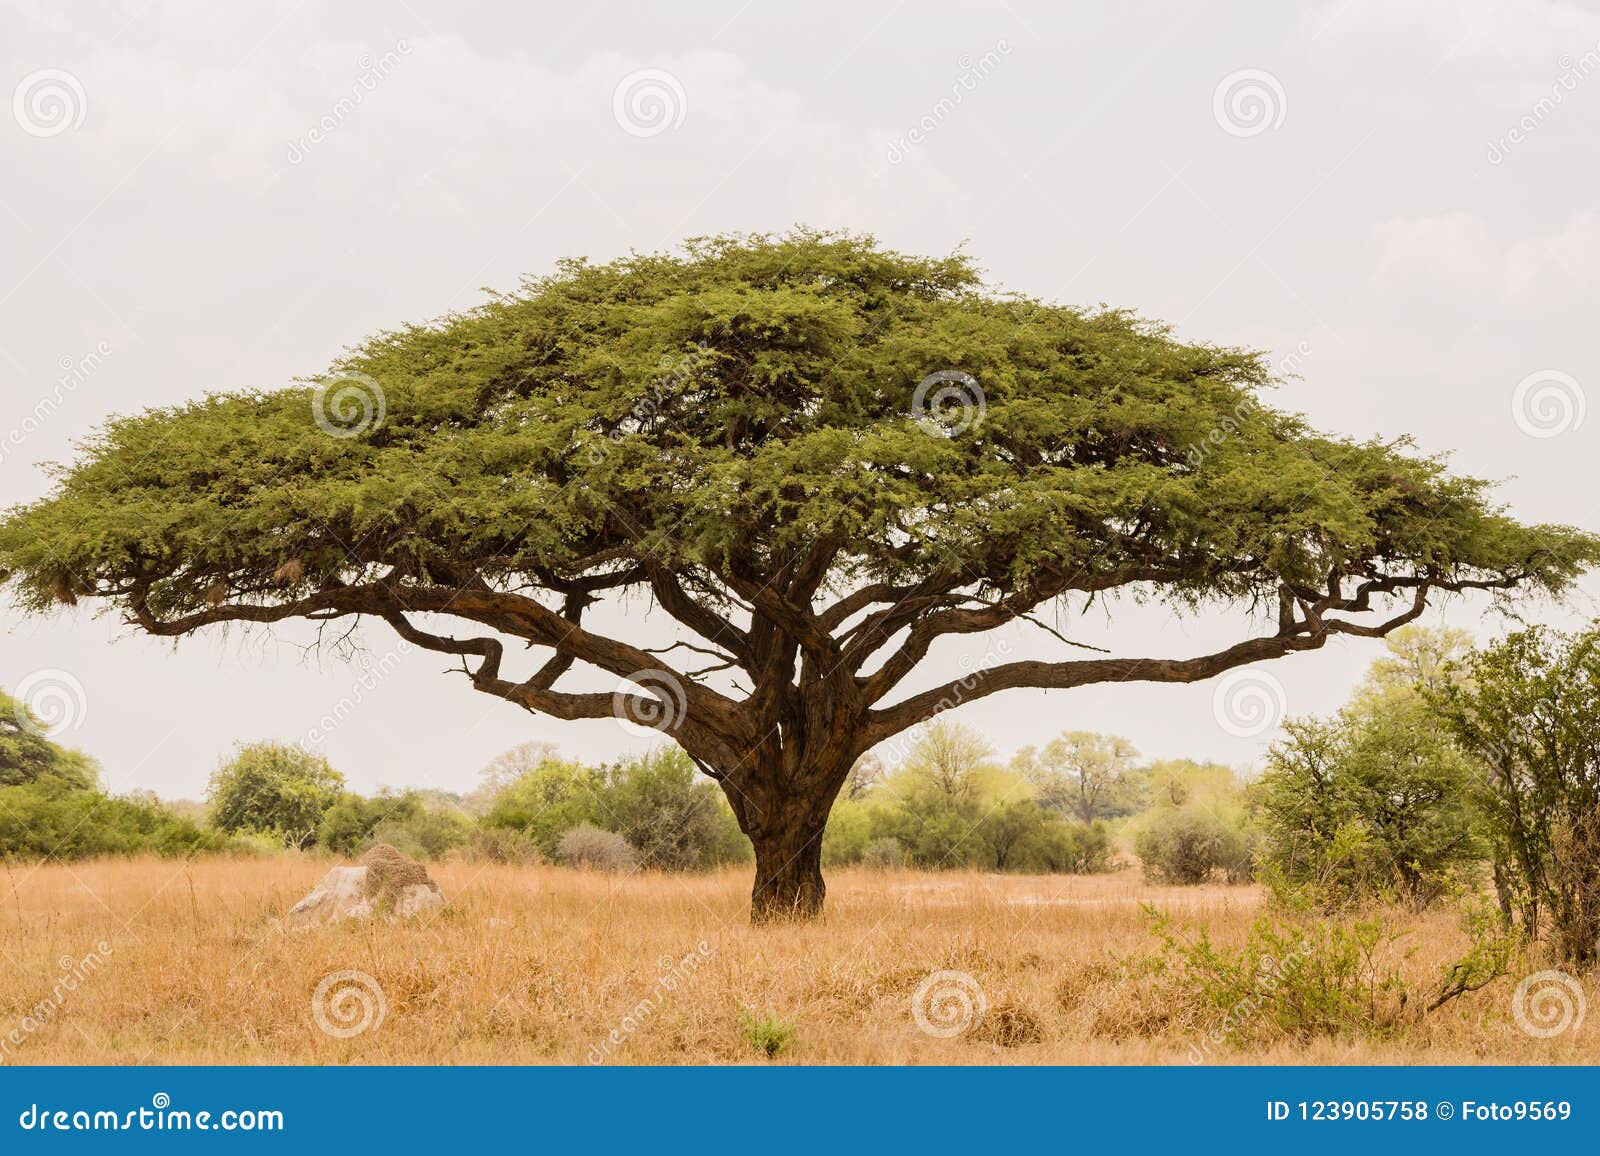 acacia tree in savannah zimbabwe, south africa stock photo - image